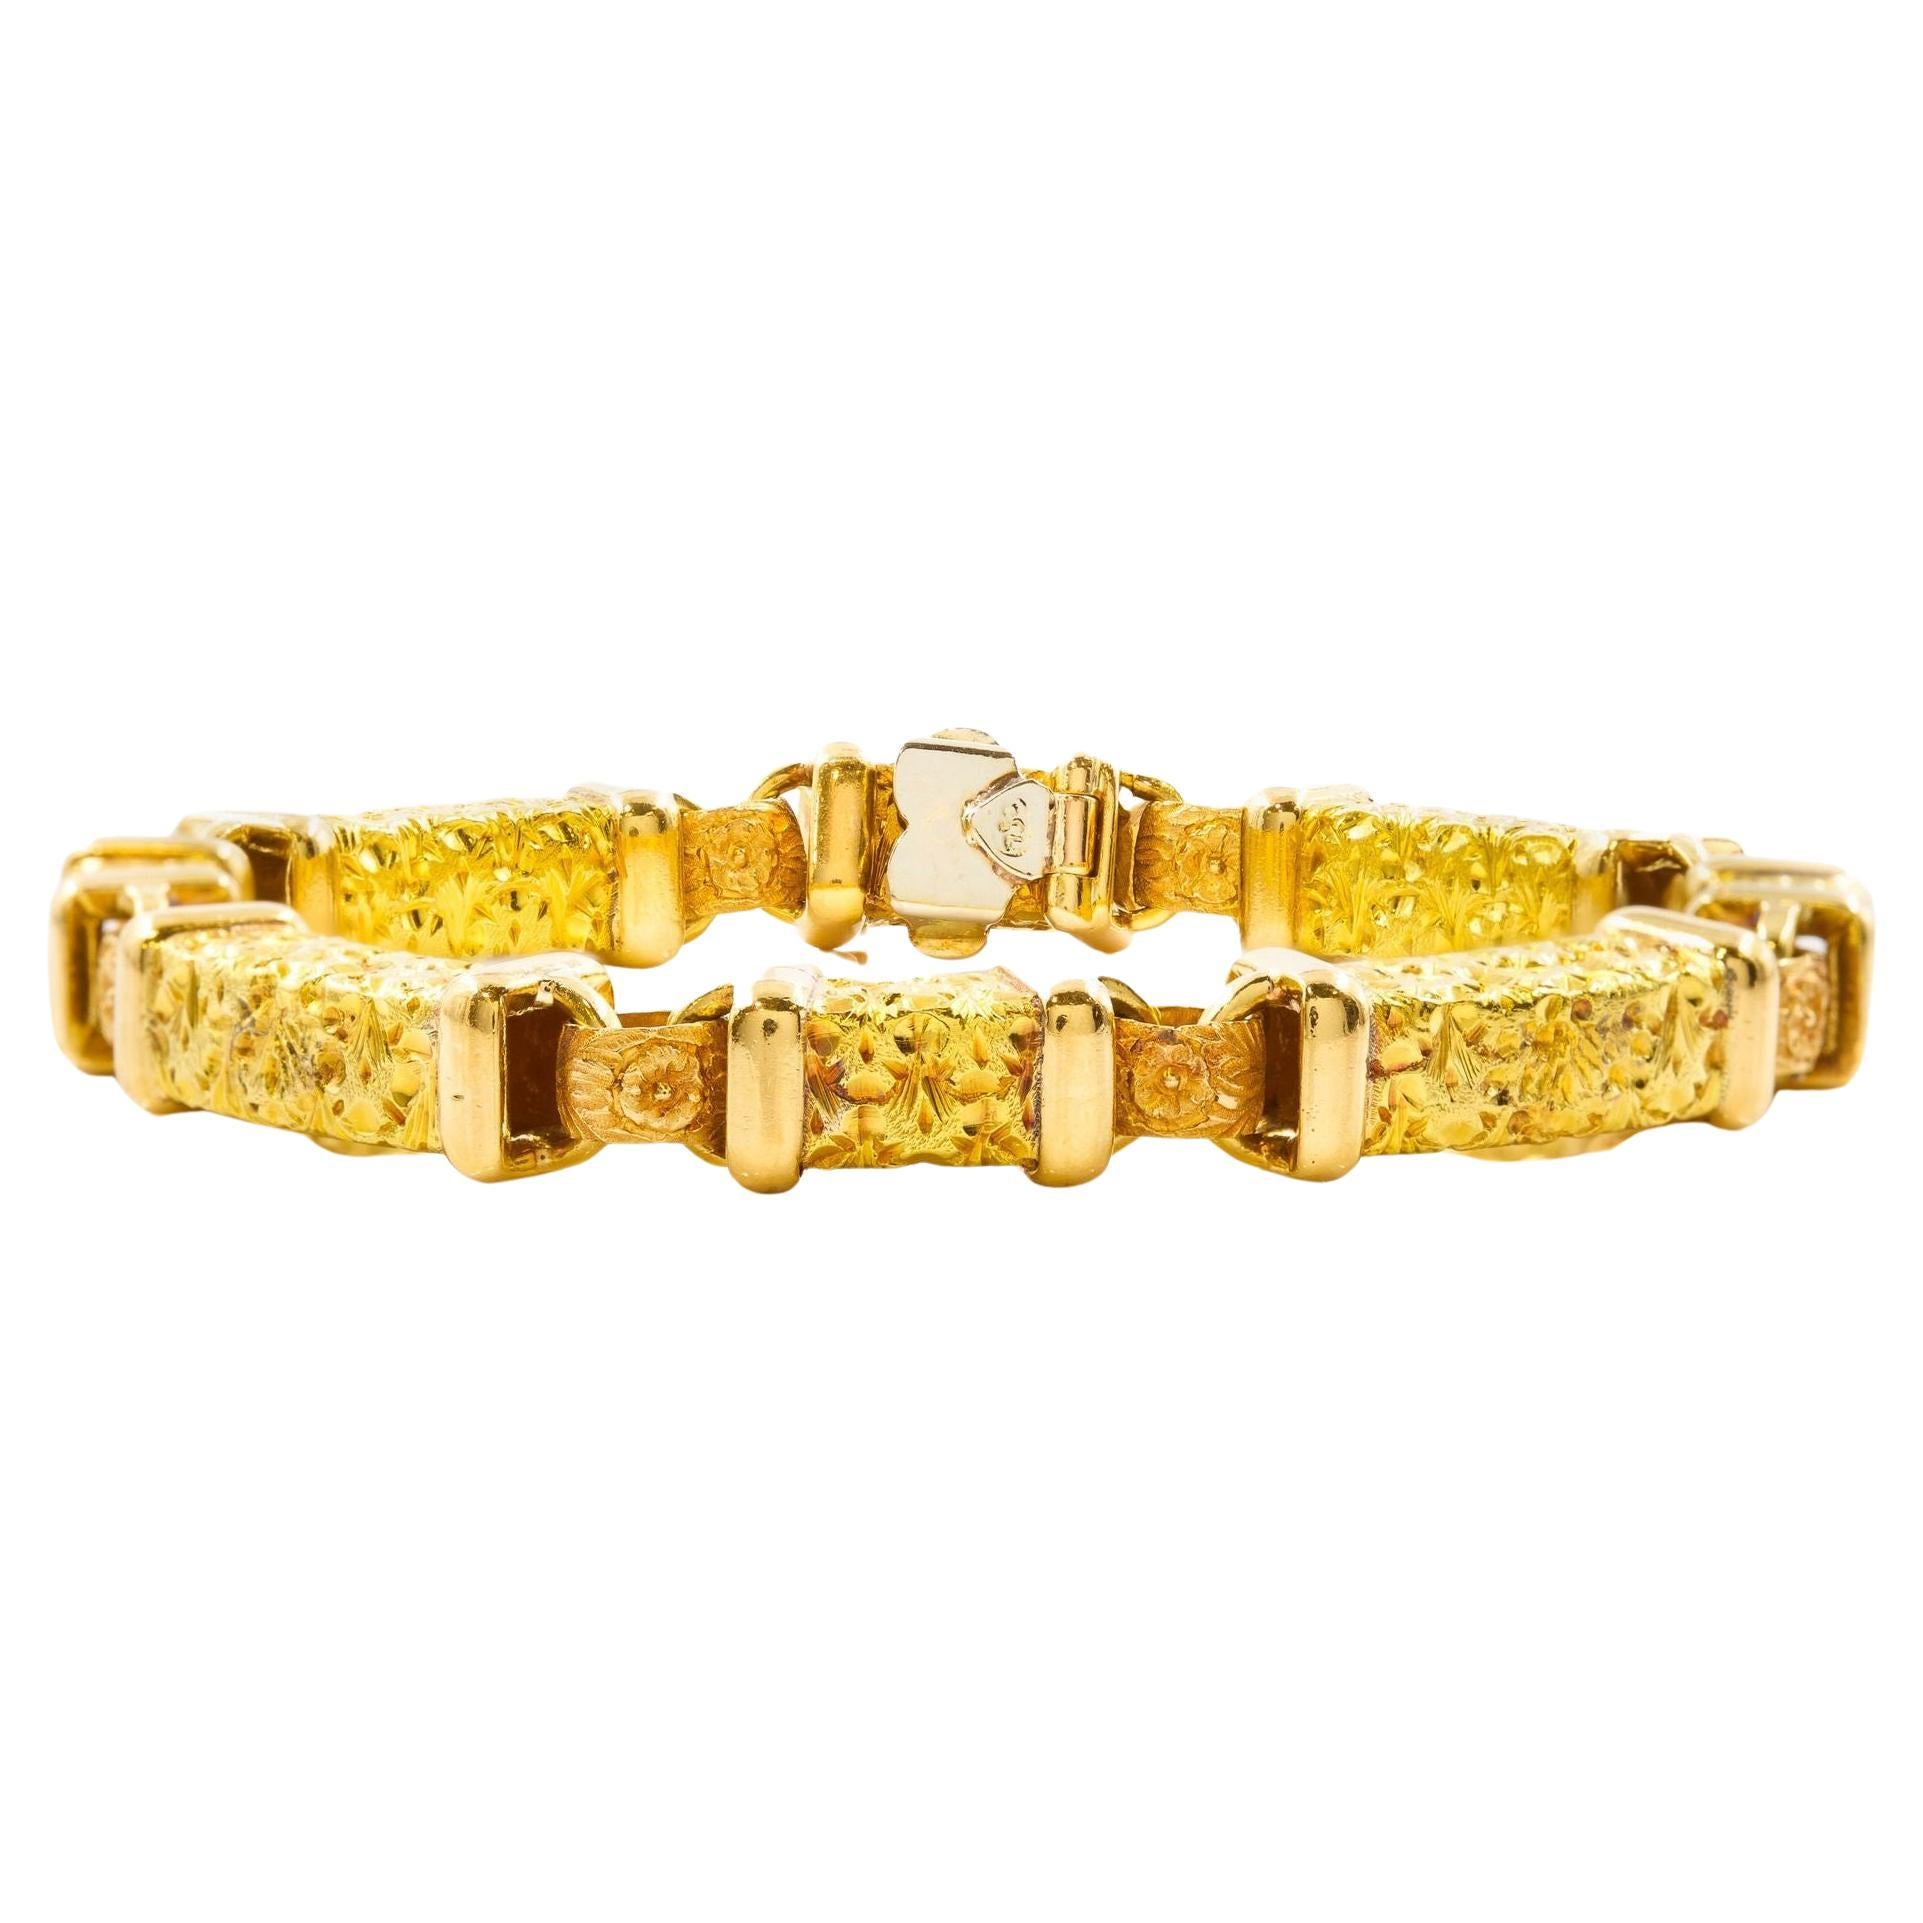 Vintage 18k Rose & Yellow Gold Bright-Cut Bracelet, 8 1/2" long